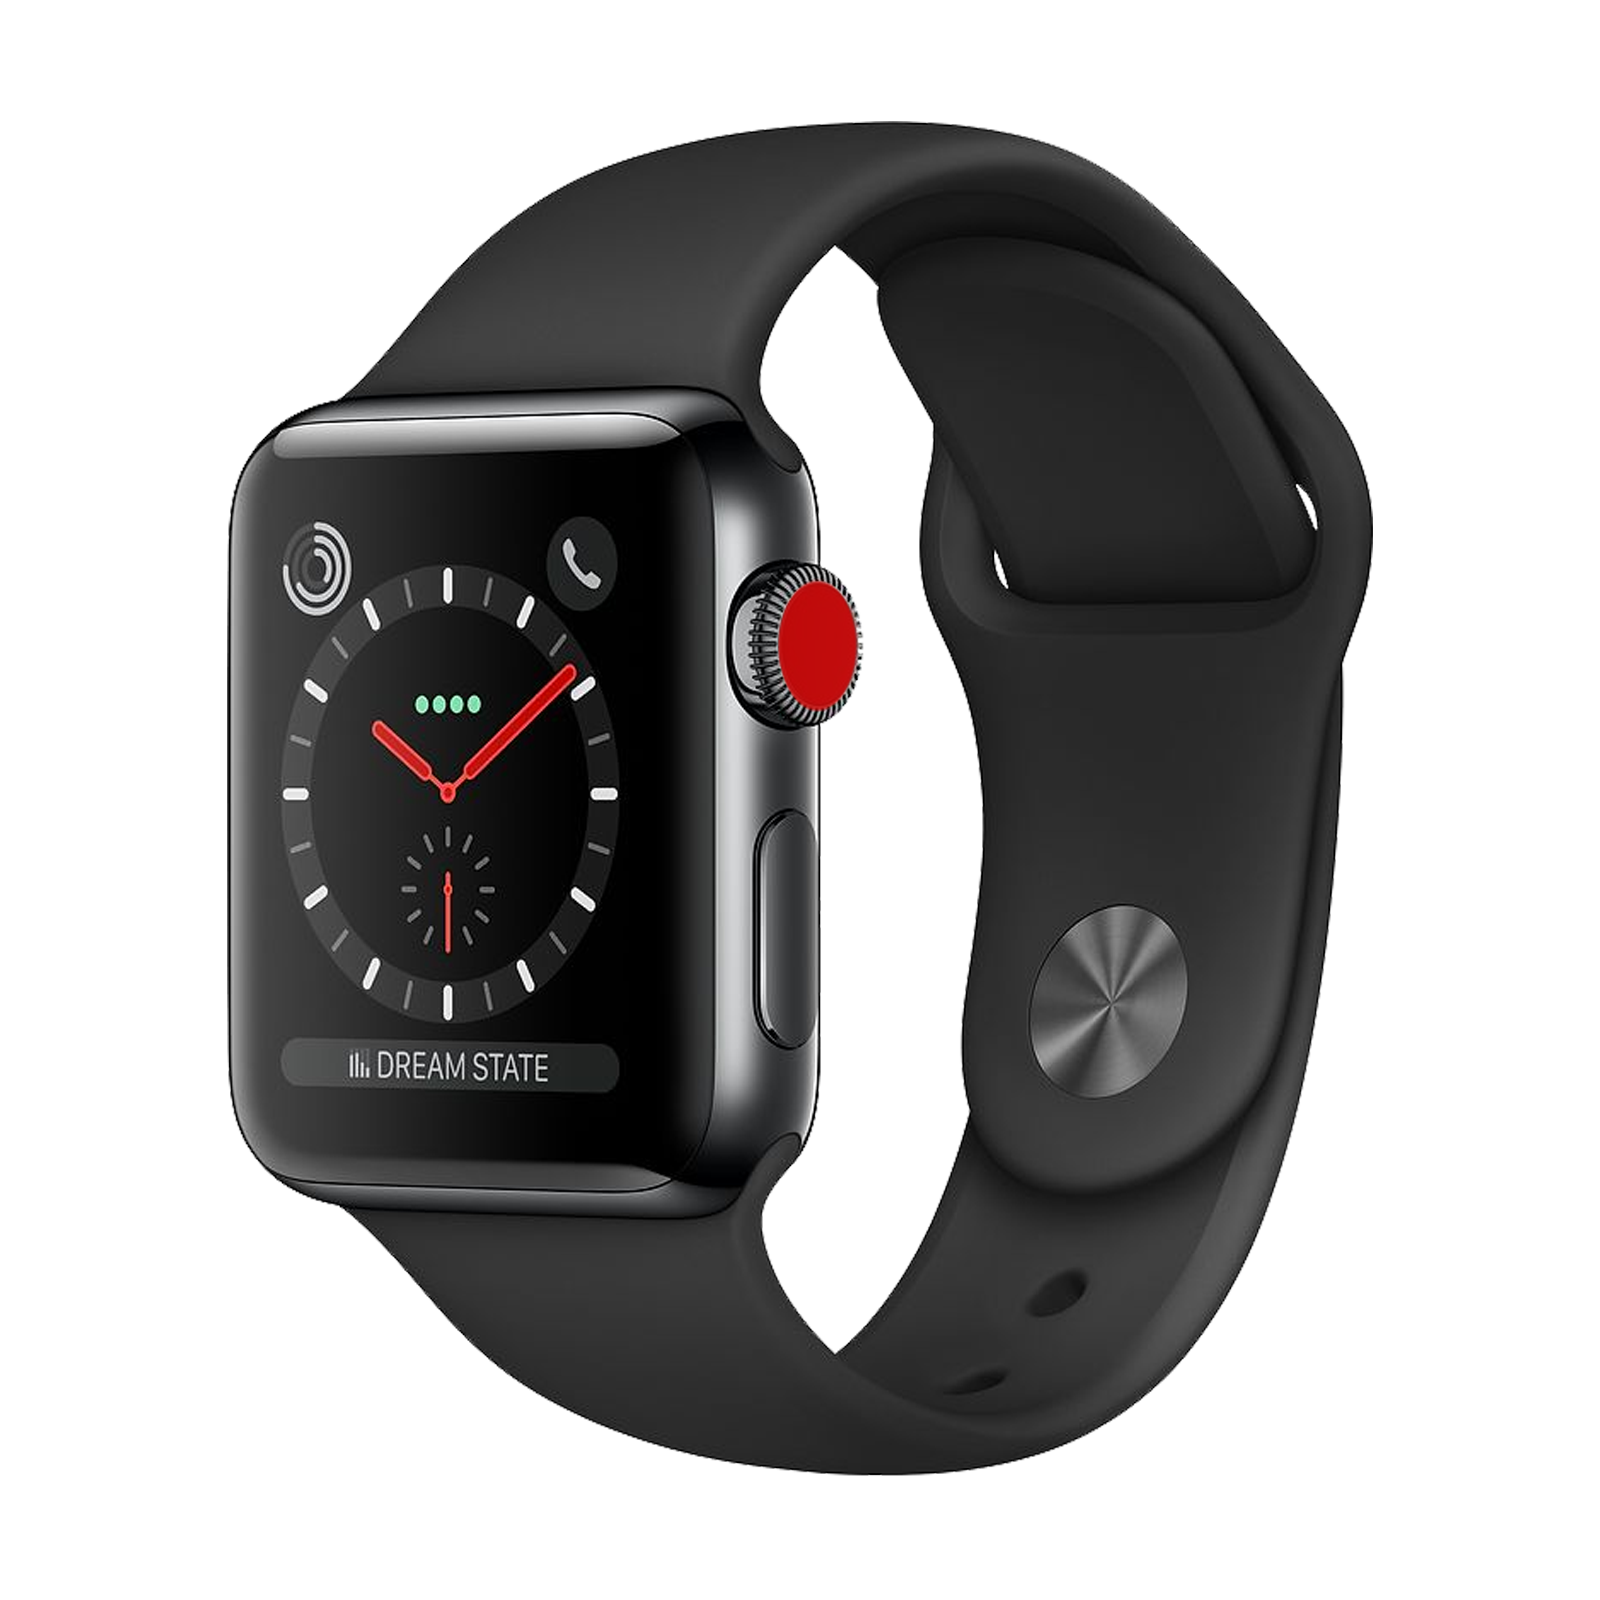 Apple Watch Series 3 Stainless 38mm Black Good - WiFi